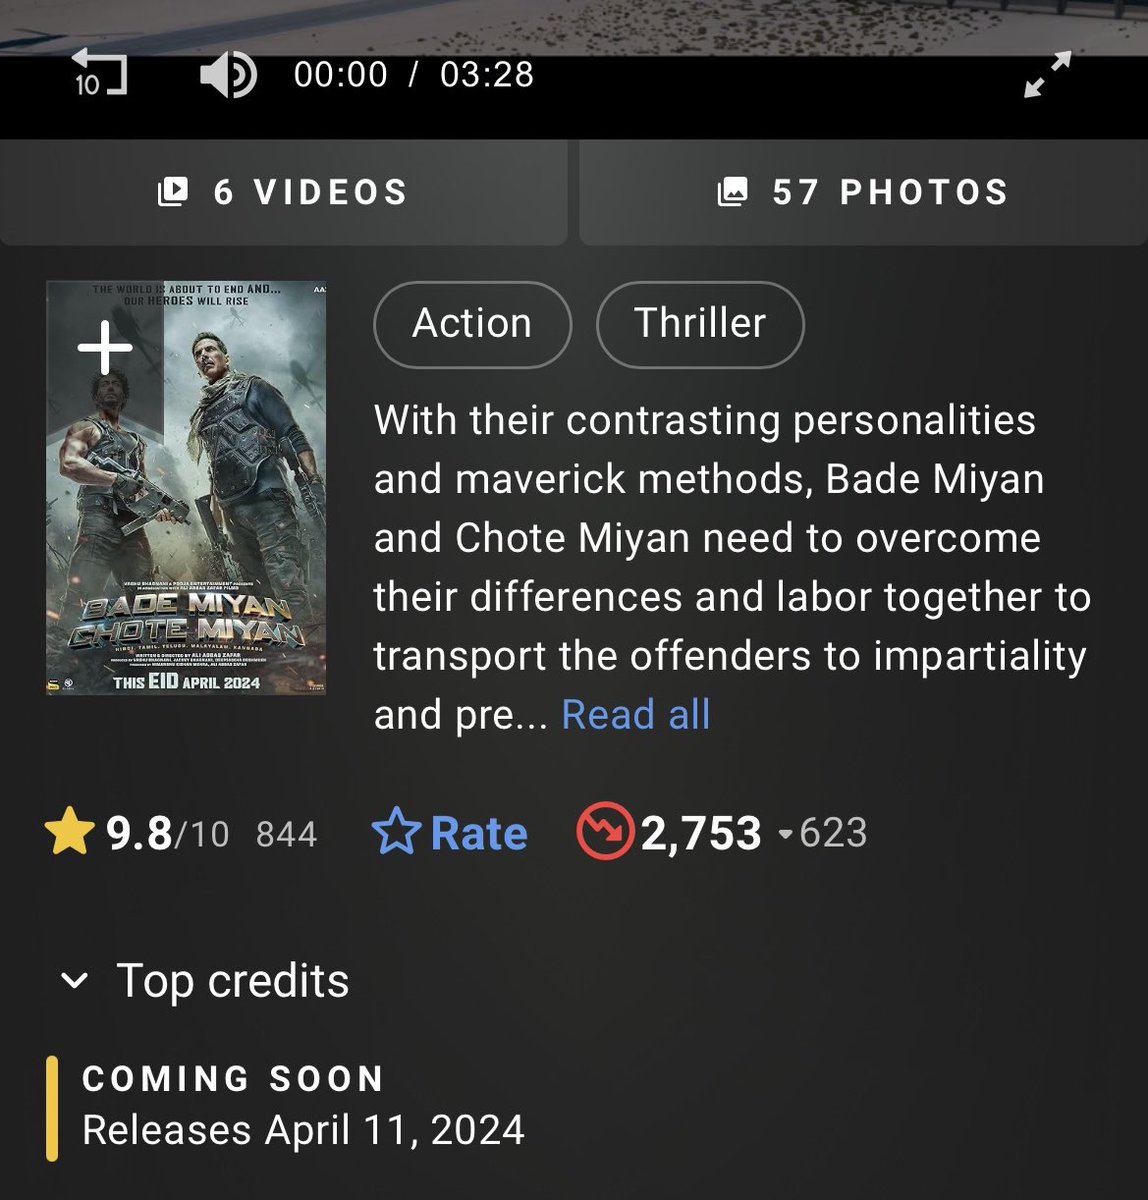 Early IMDB rating of #BMCM 🔥
#AkshayKumar𓃵 #TigerShroff